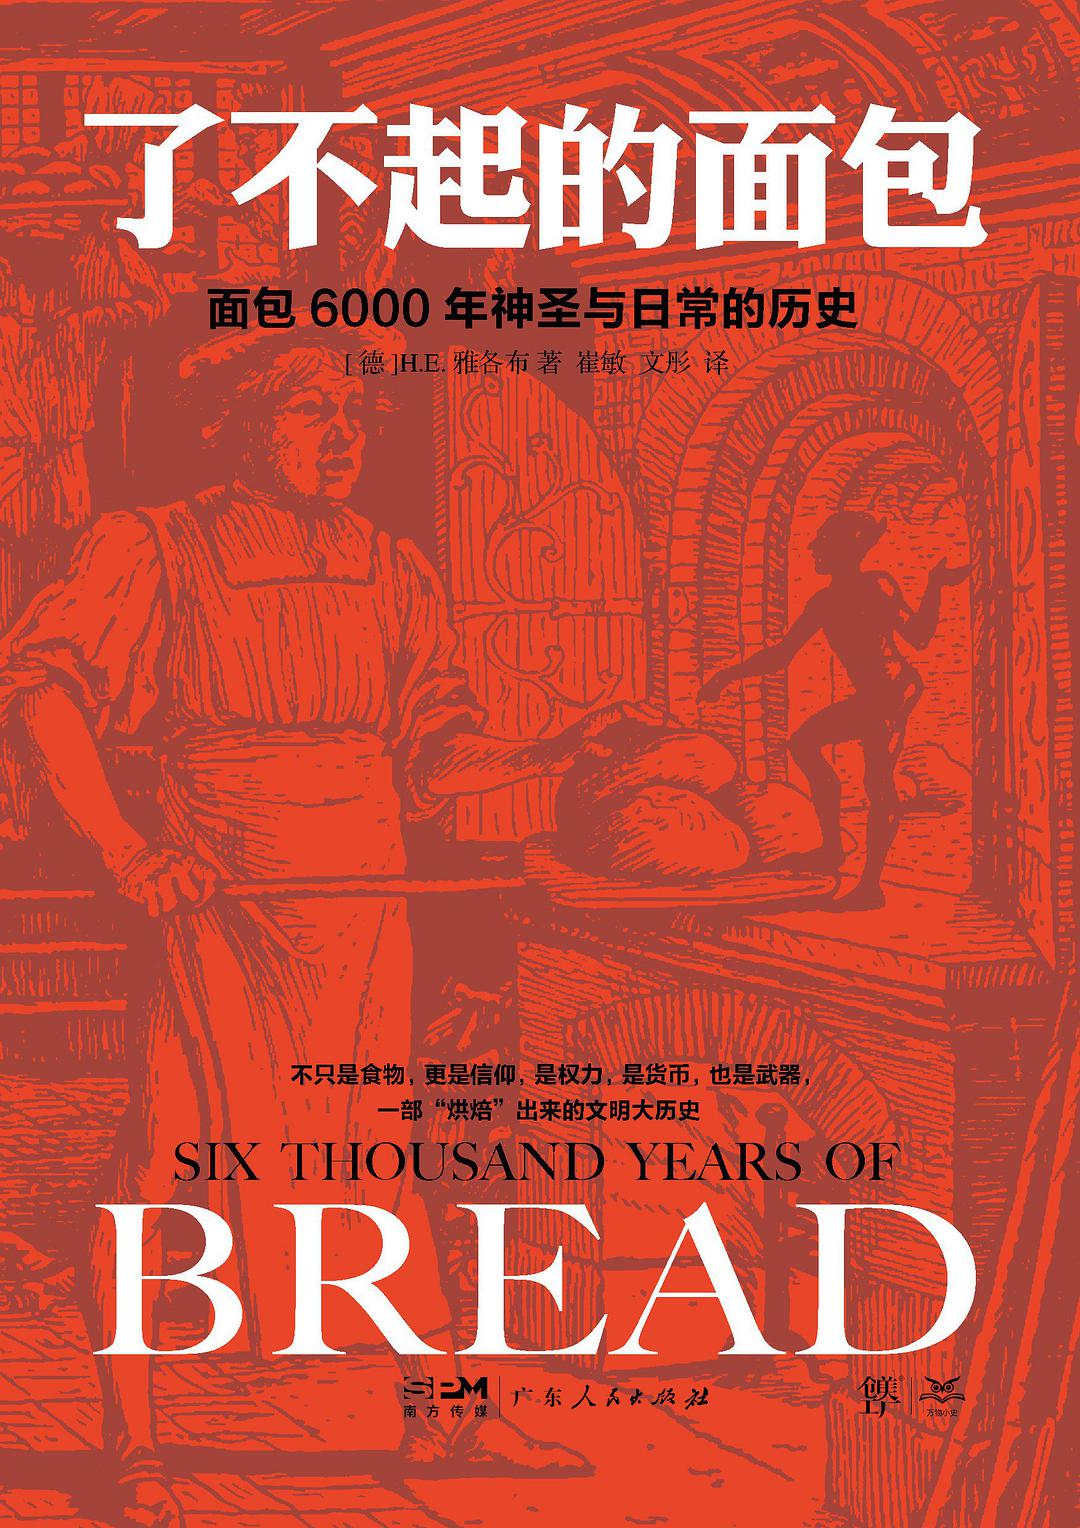 H.E.雅各布: 了不起的面包 (2022, 广东人民出版社)